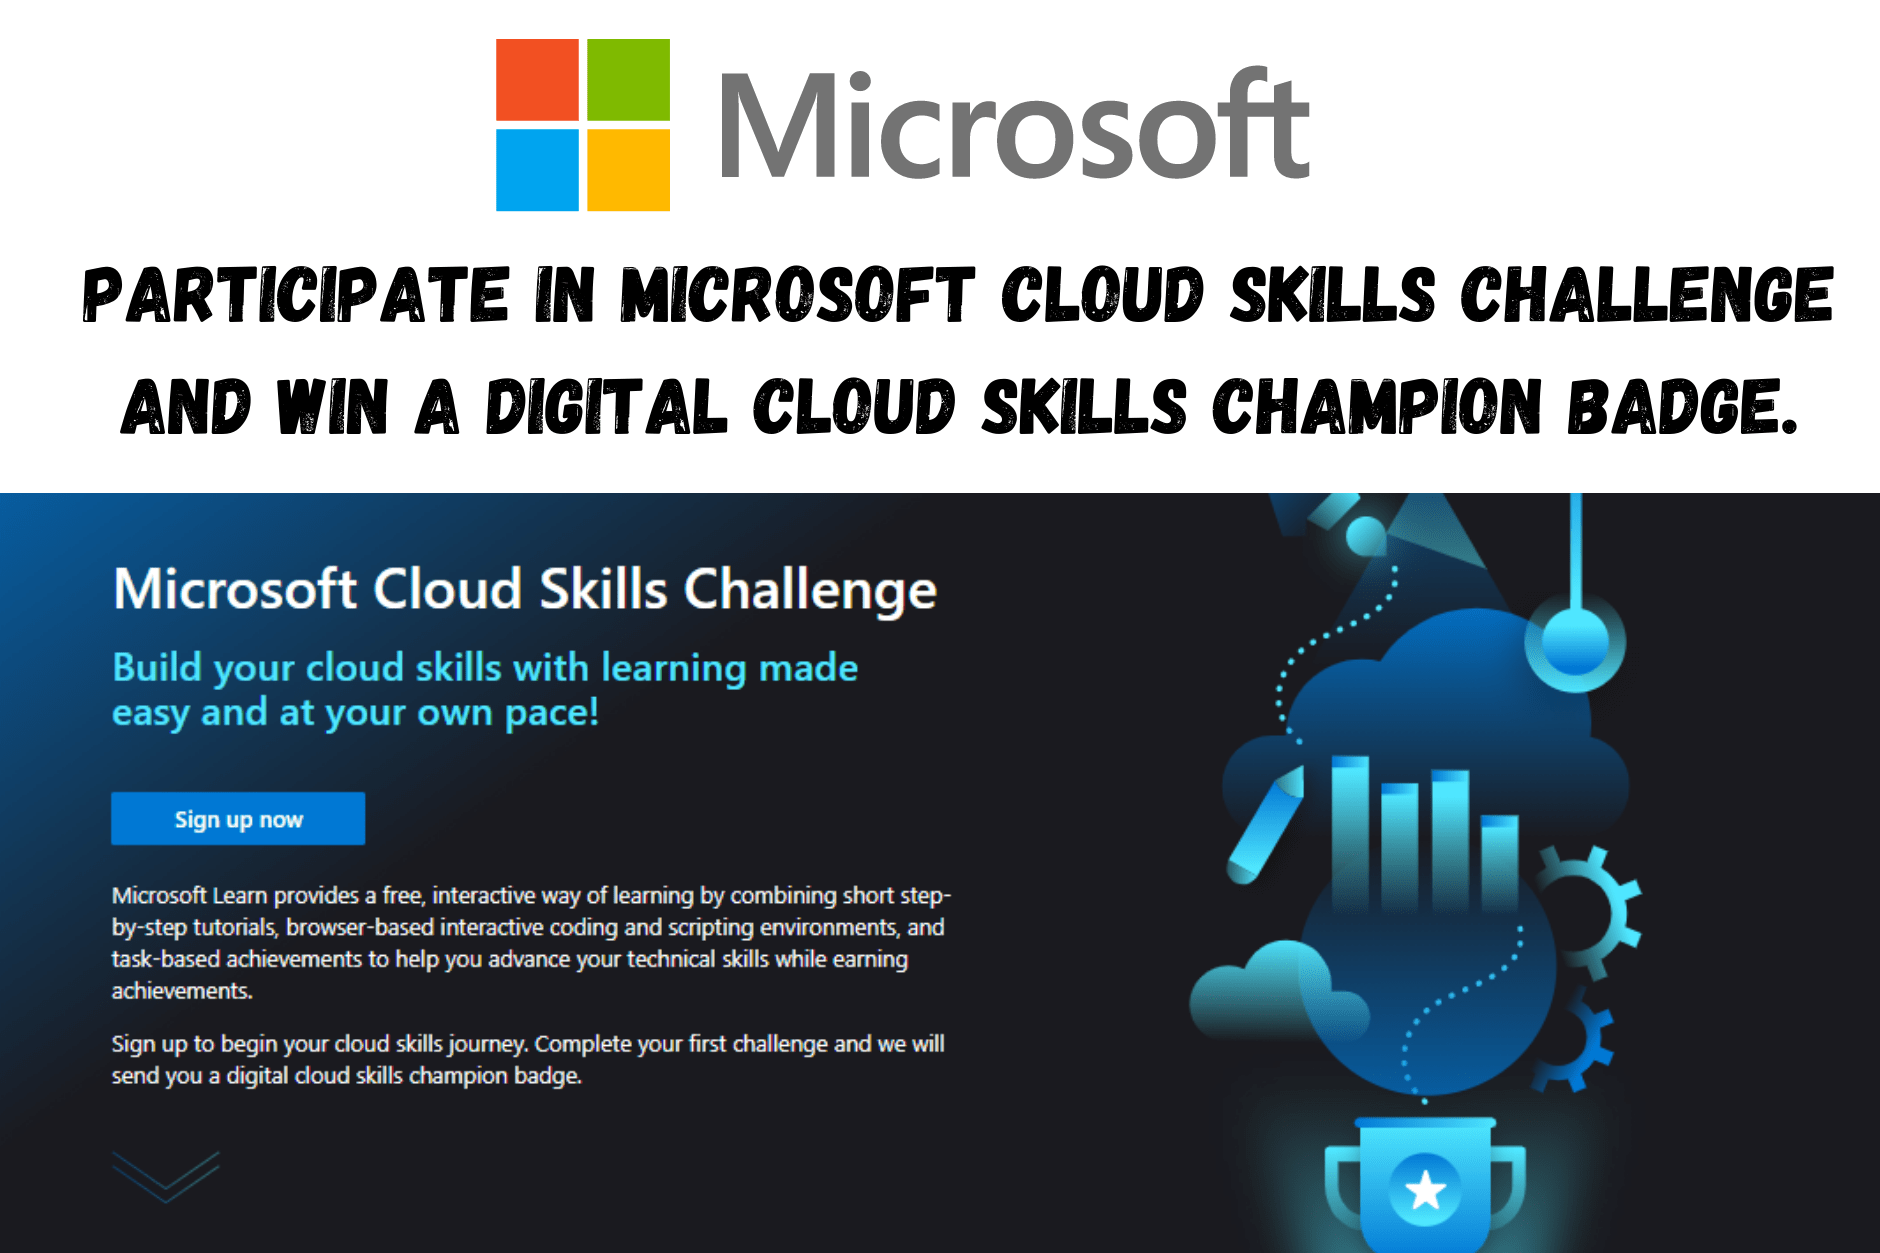 Participate in Microsoft Cloud Skills Challenge and win a digital cloud skills champion badge.